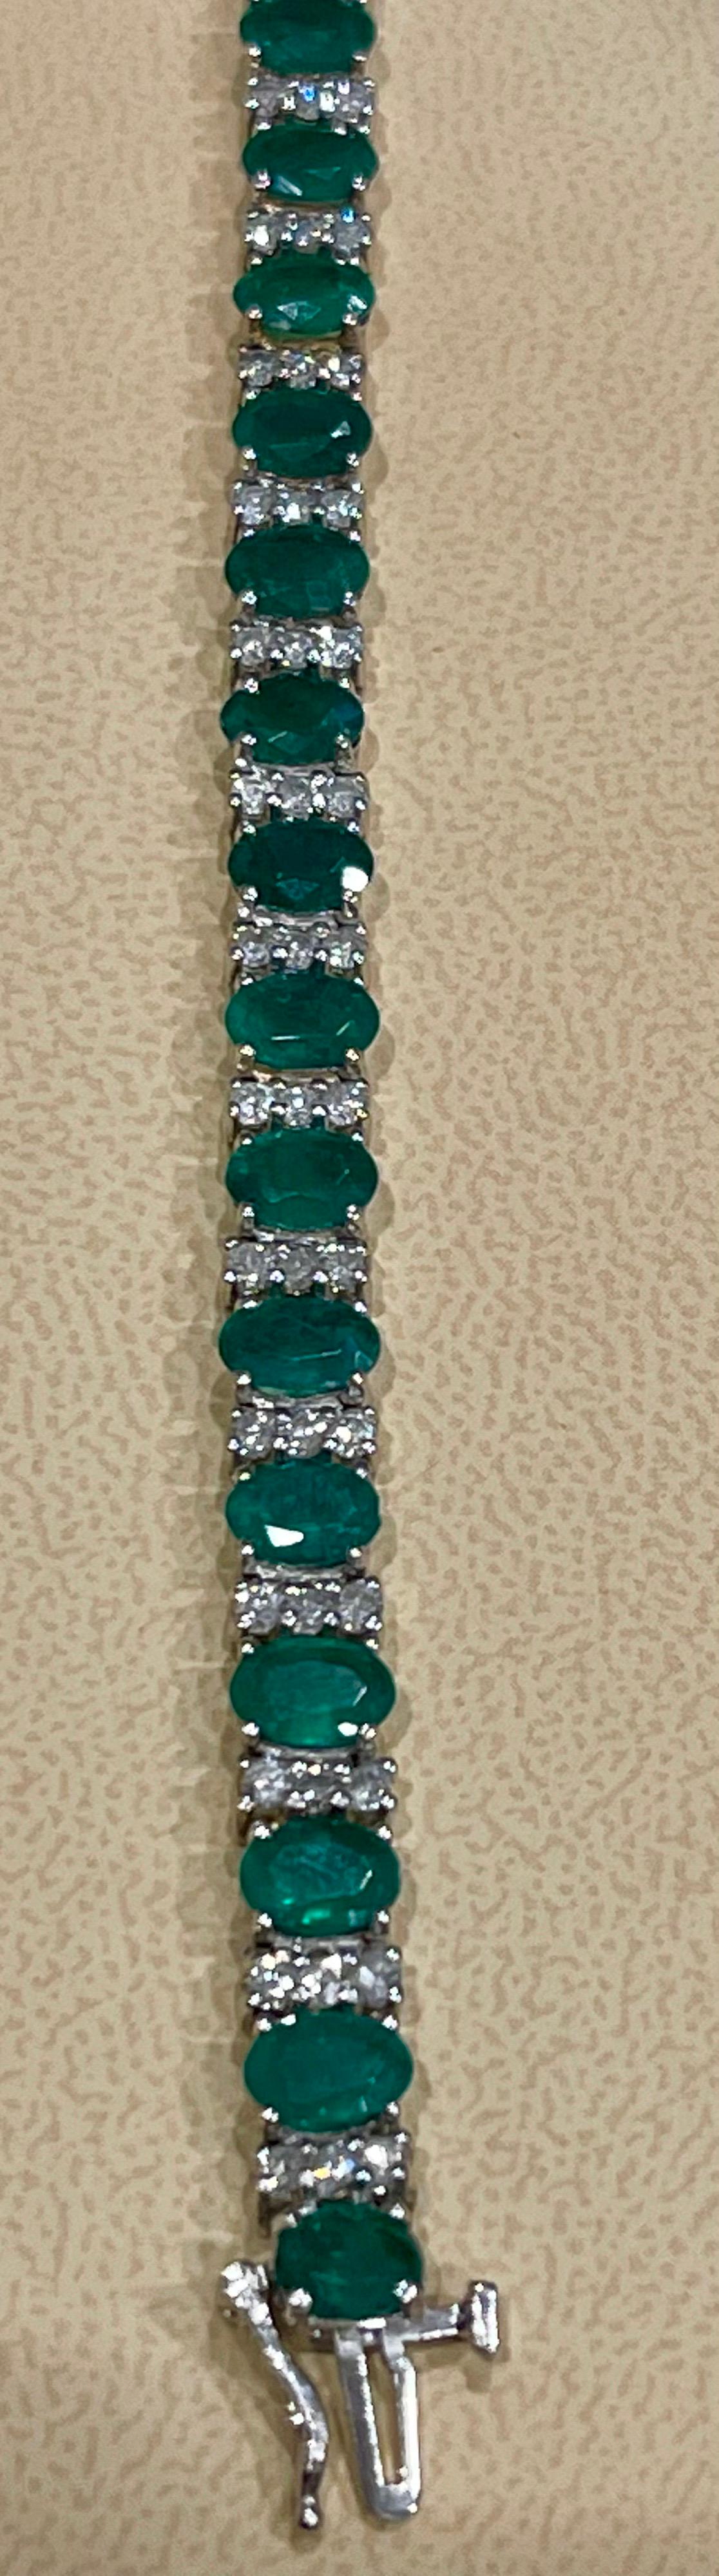 18 carat Natural Emerald & Diamond Cocktail Tennis Bracelet 14 Karat White Gold For Sale 8